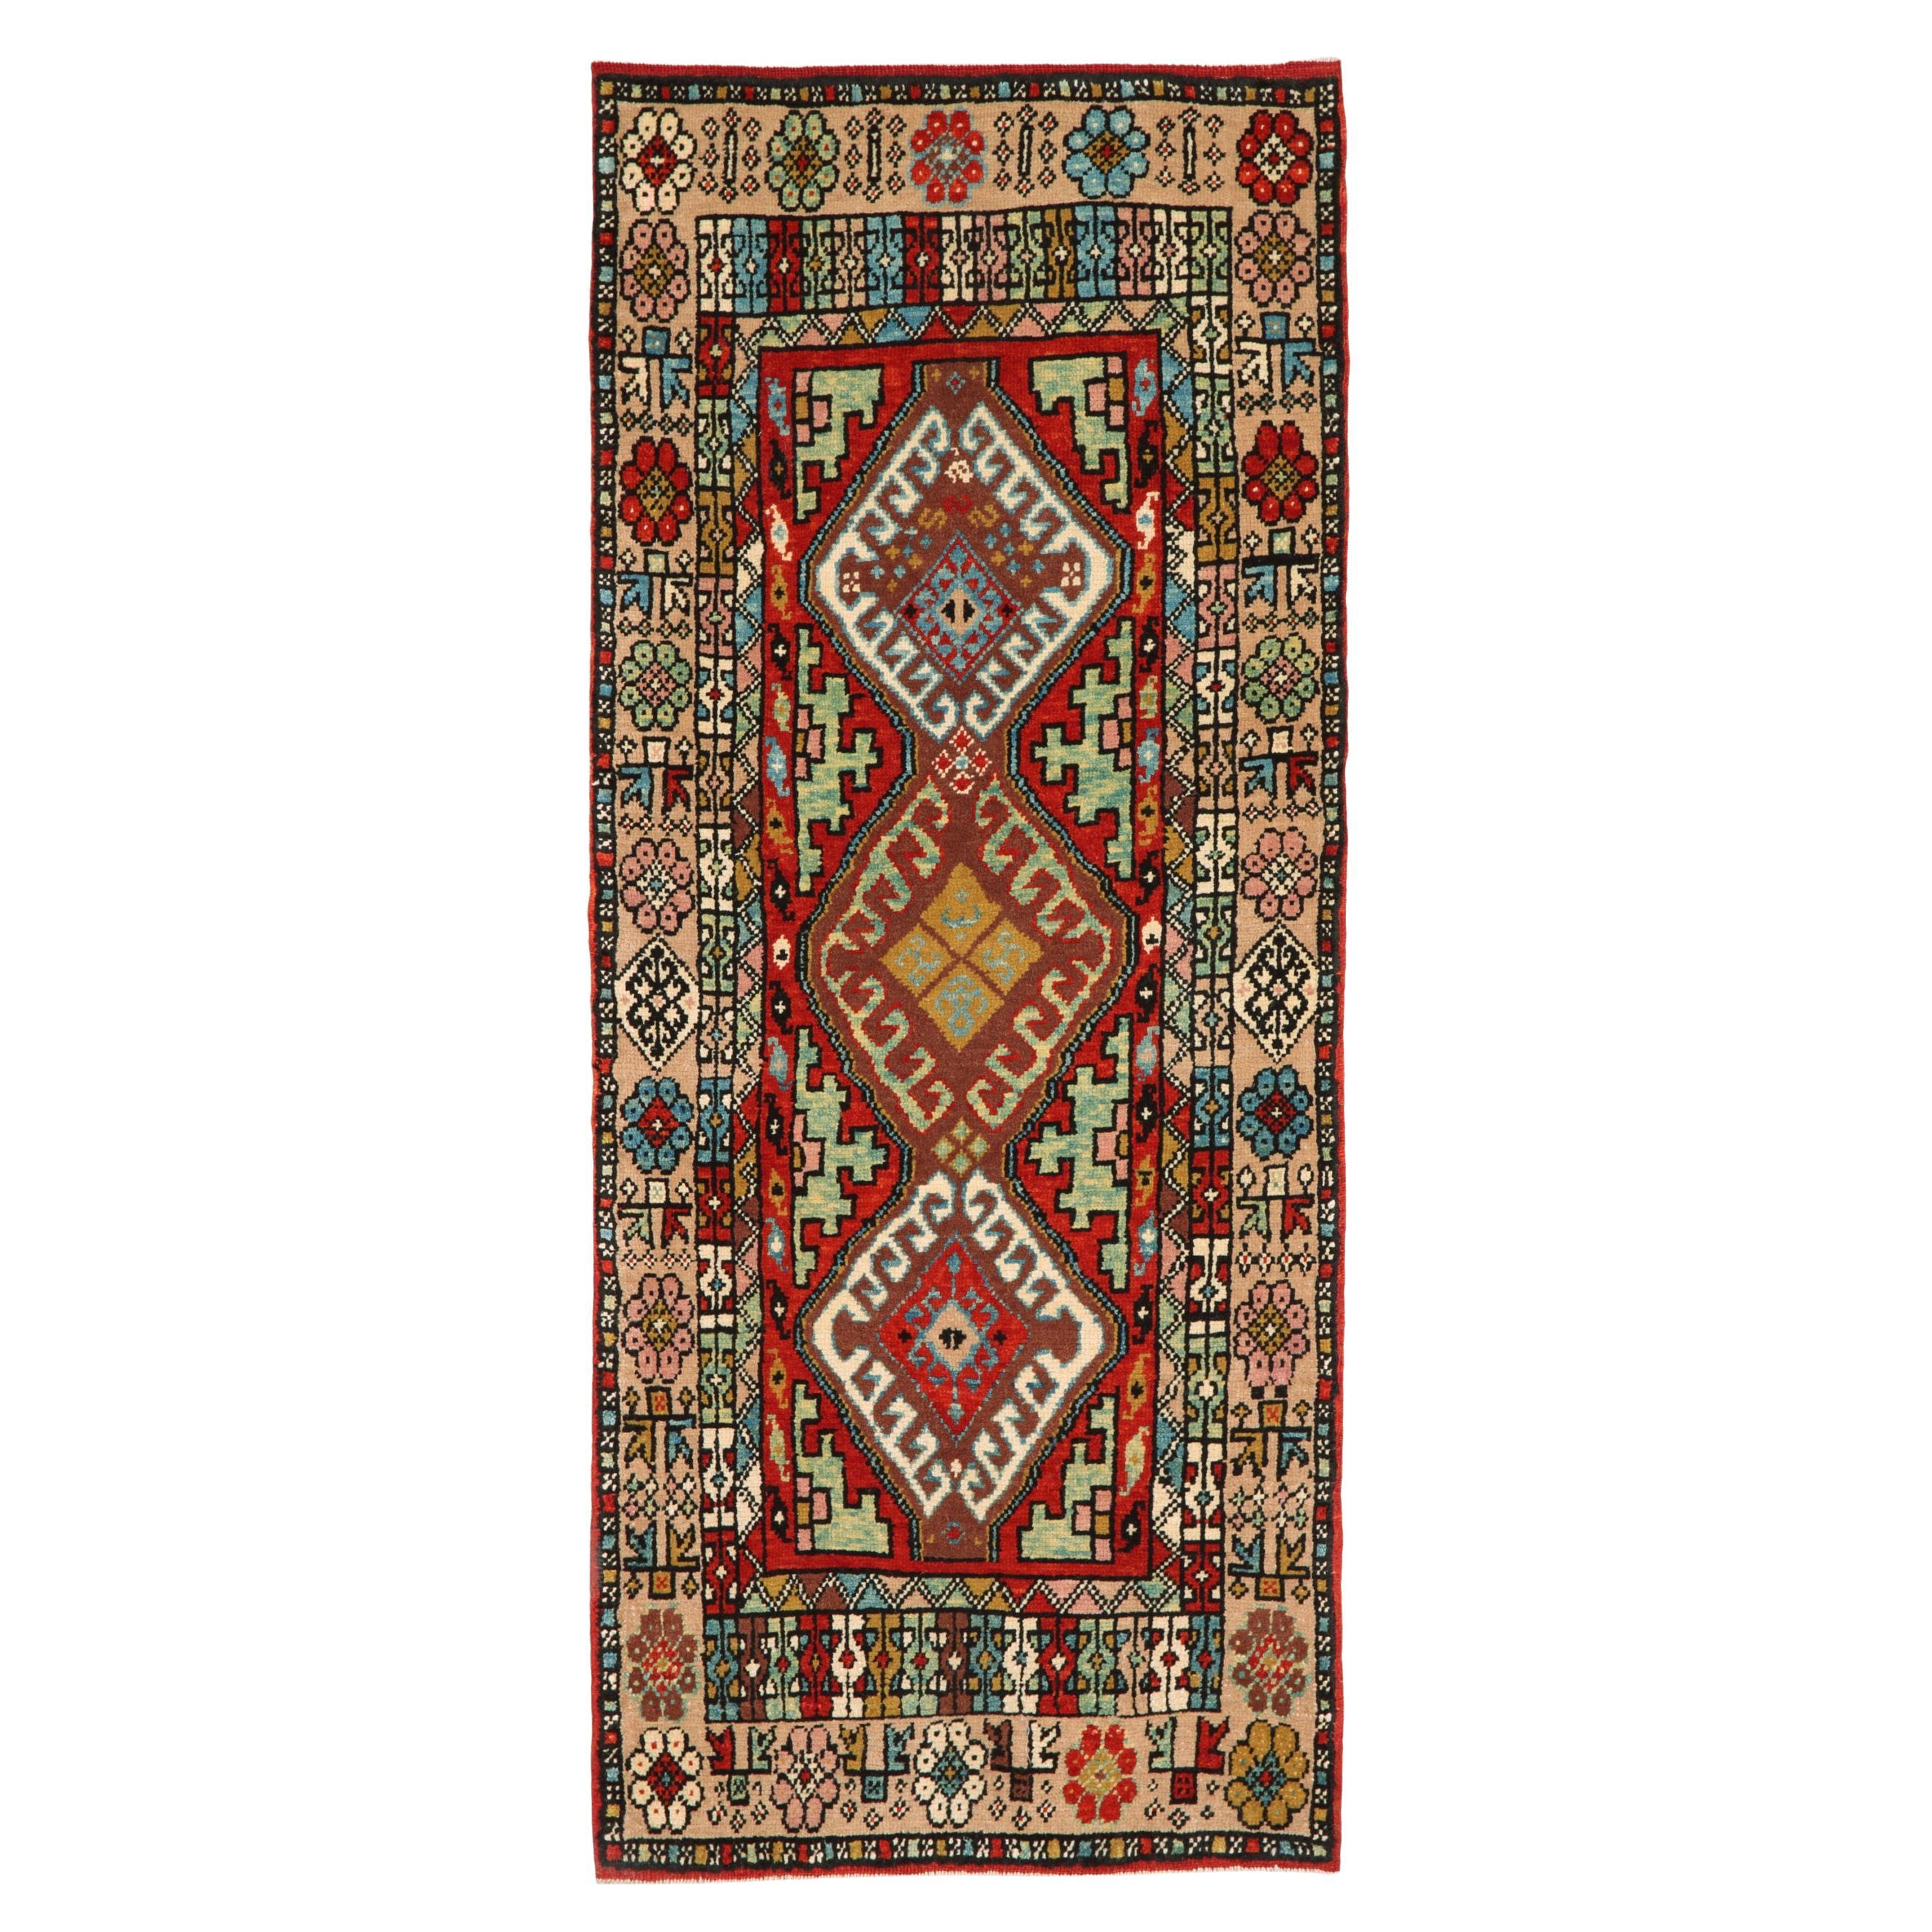 Ararat Rugs Anatolian Yastik Rug Revival Turkish Wagireh Carpet Natural Dyed For Sale